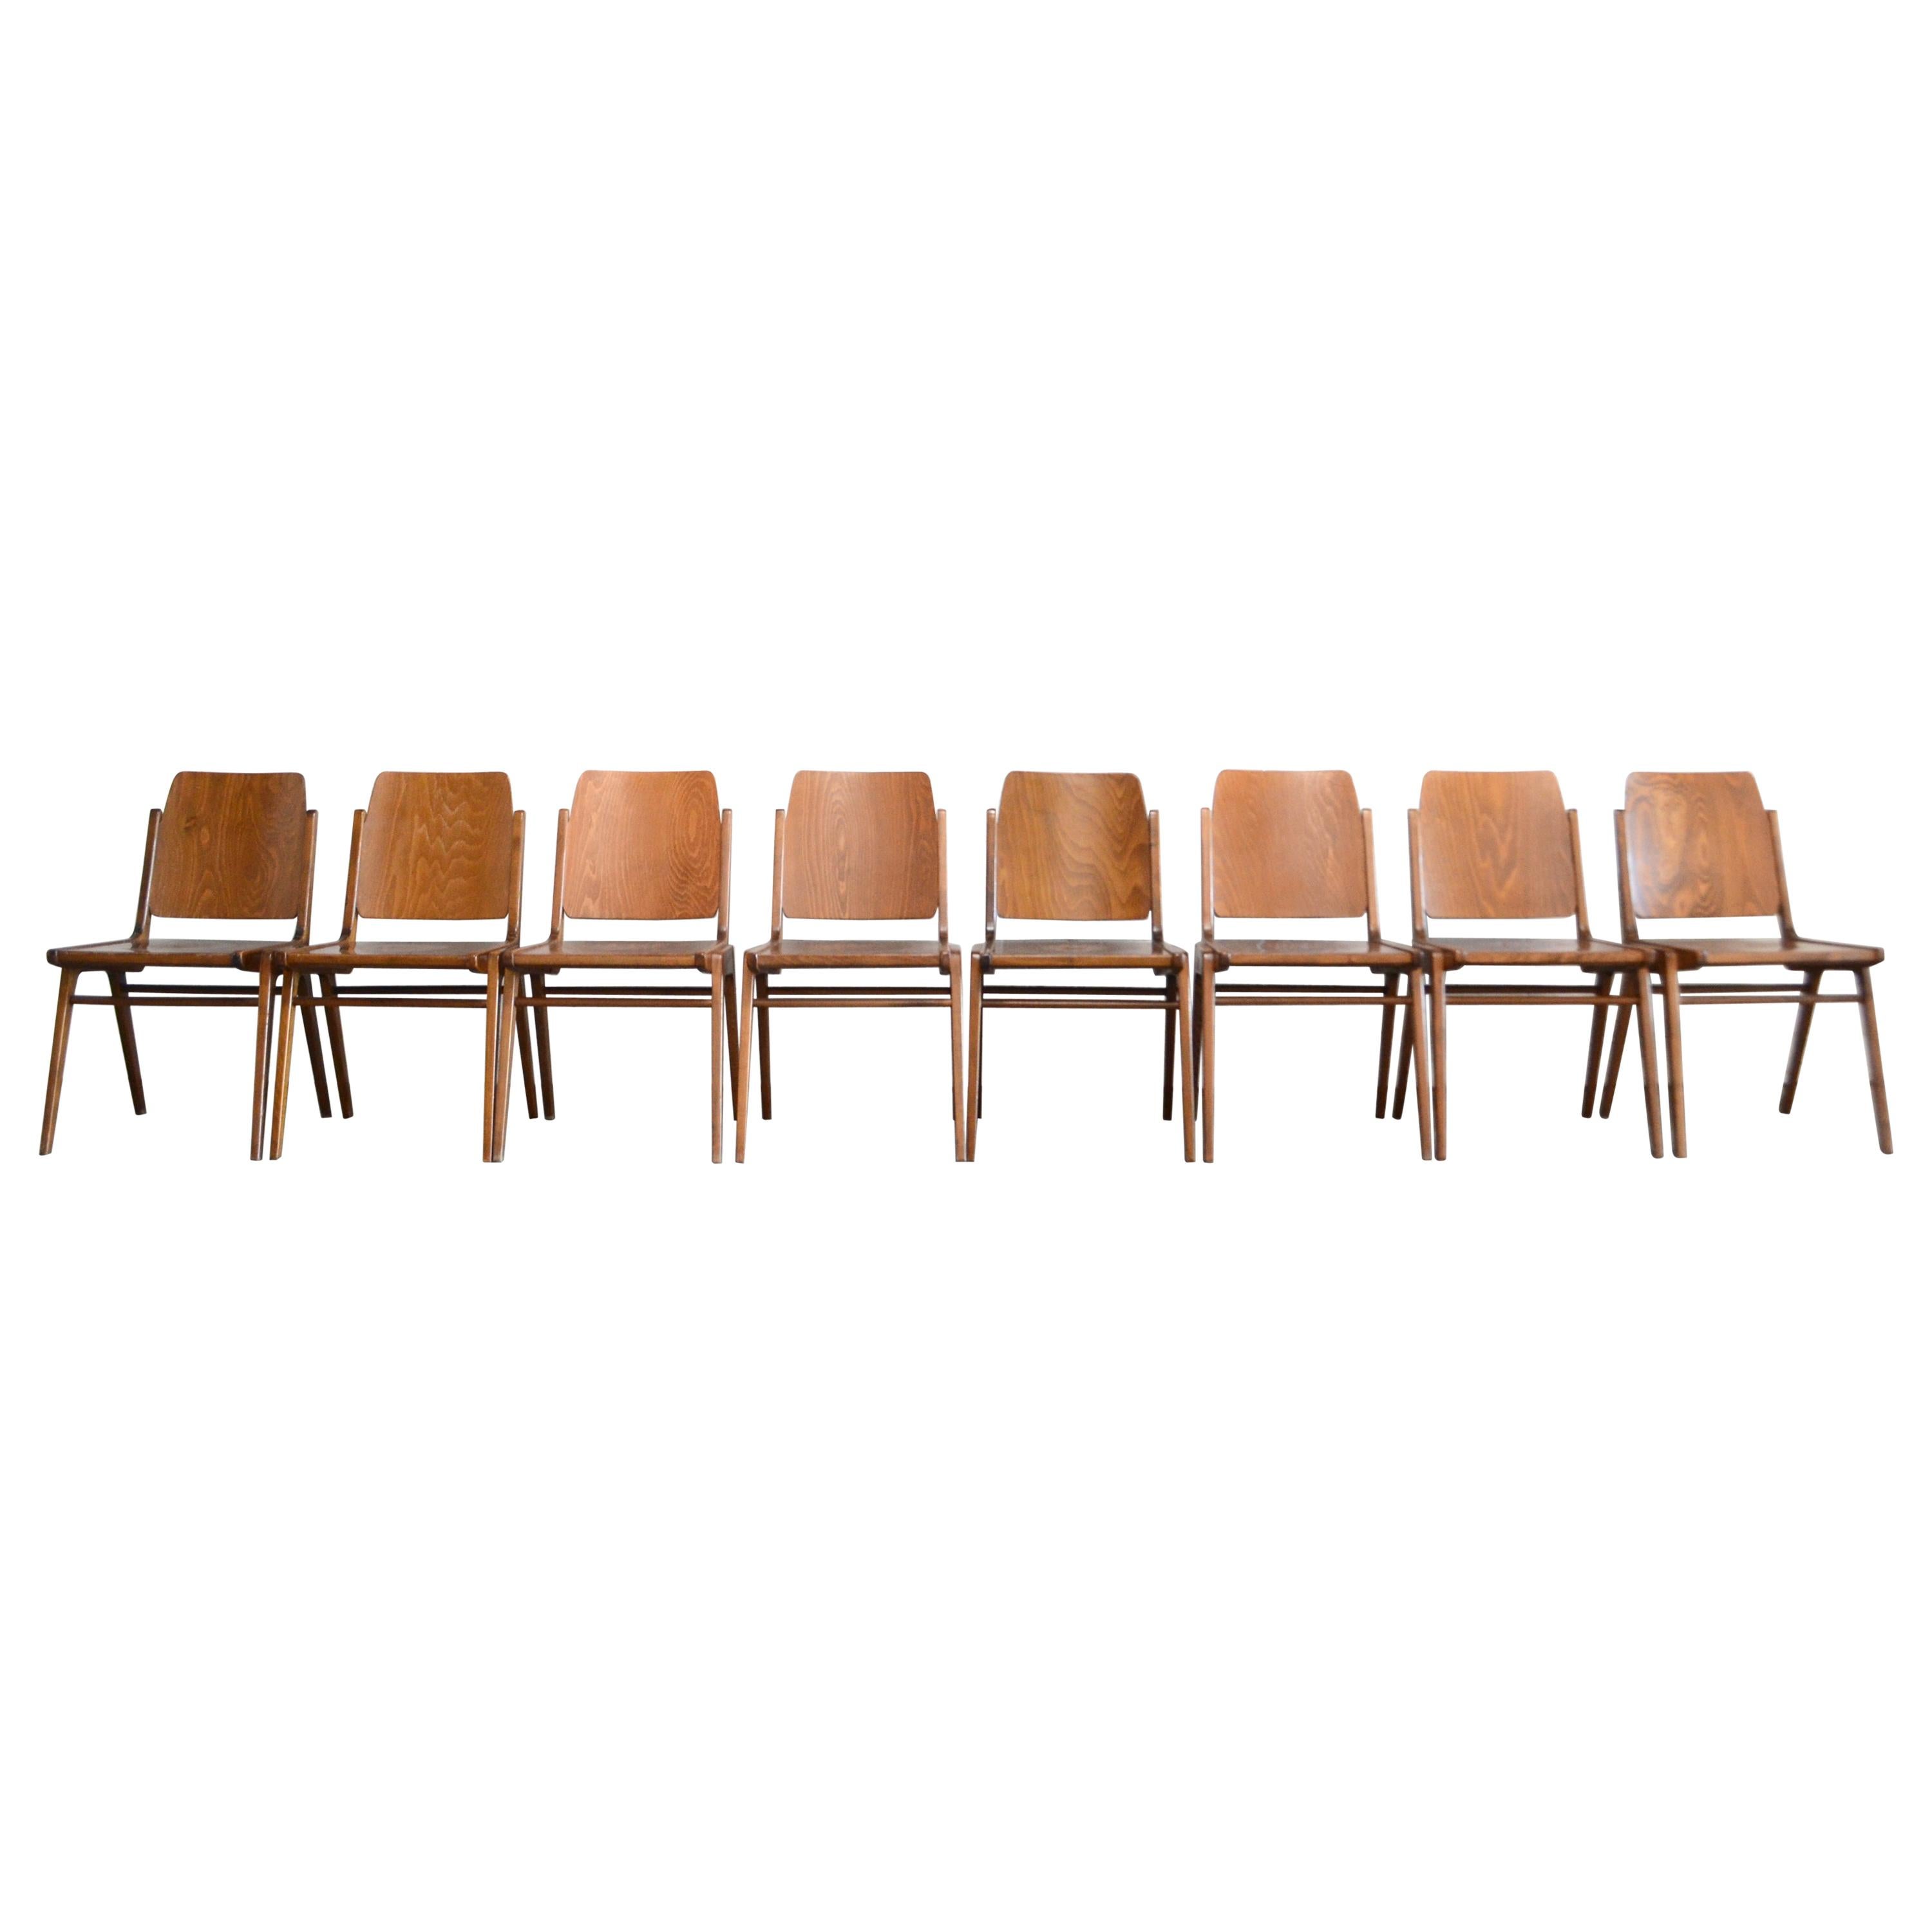 8 Set of Original Austro Chairs by Franz Schuster for Wiesner Hager Austria 1959